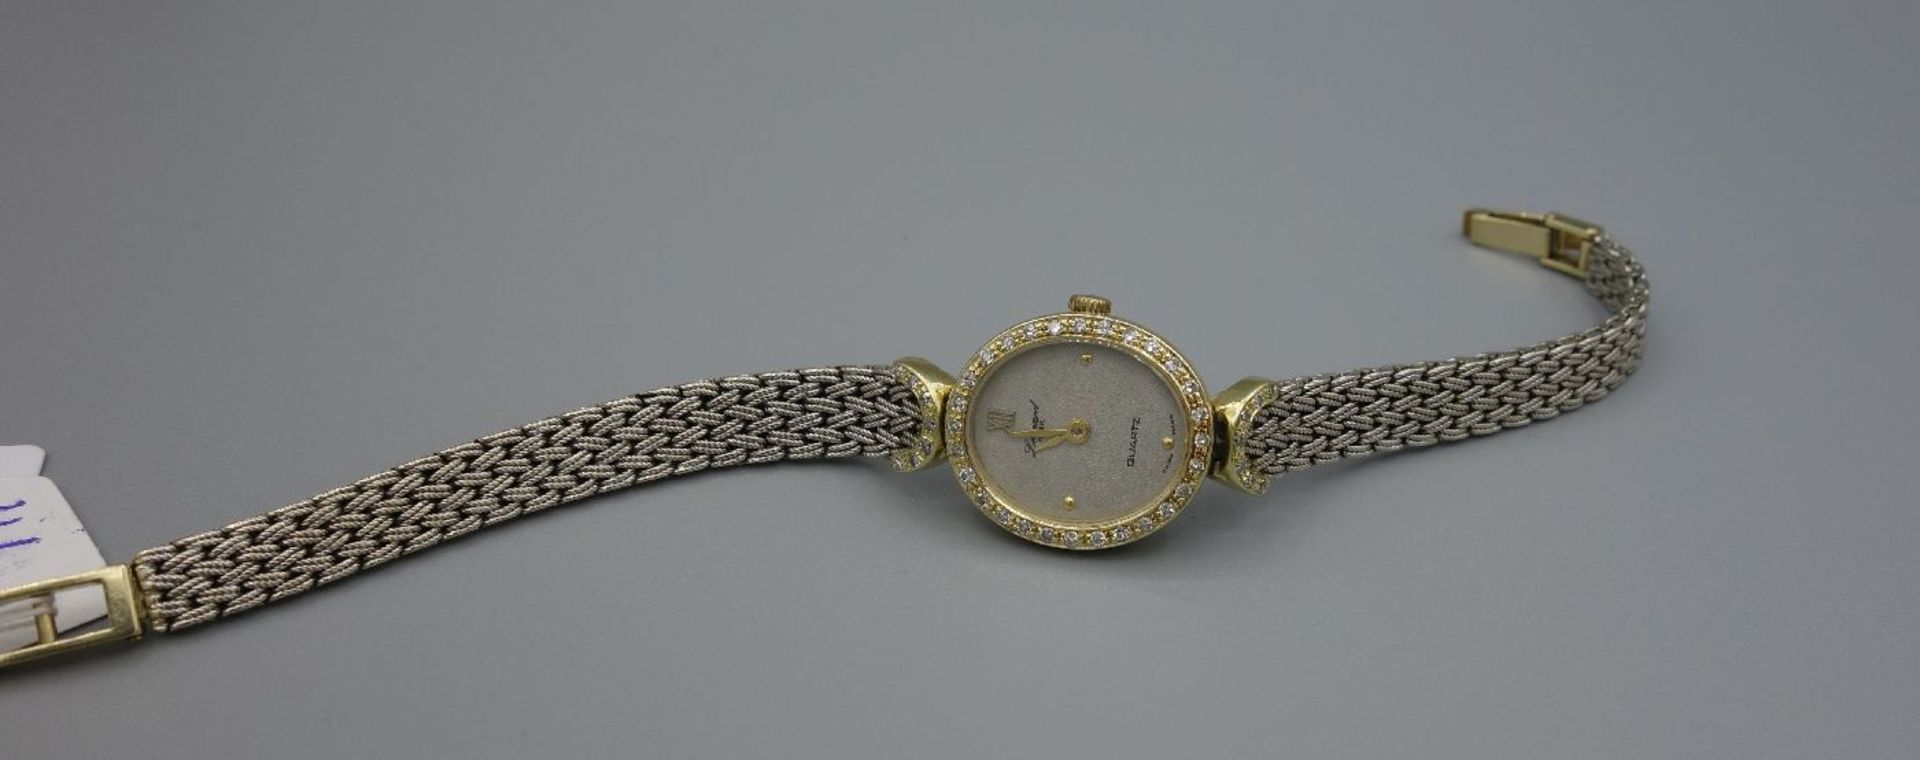 ELEGANTE DAMEN-ARMBANDUHR - LÉONARD / wristwatch, 2. H. 20. Jh., Quarz-Uhr, Manufaktur Léonard / - Image 3 of 7